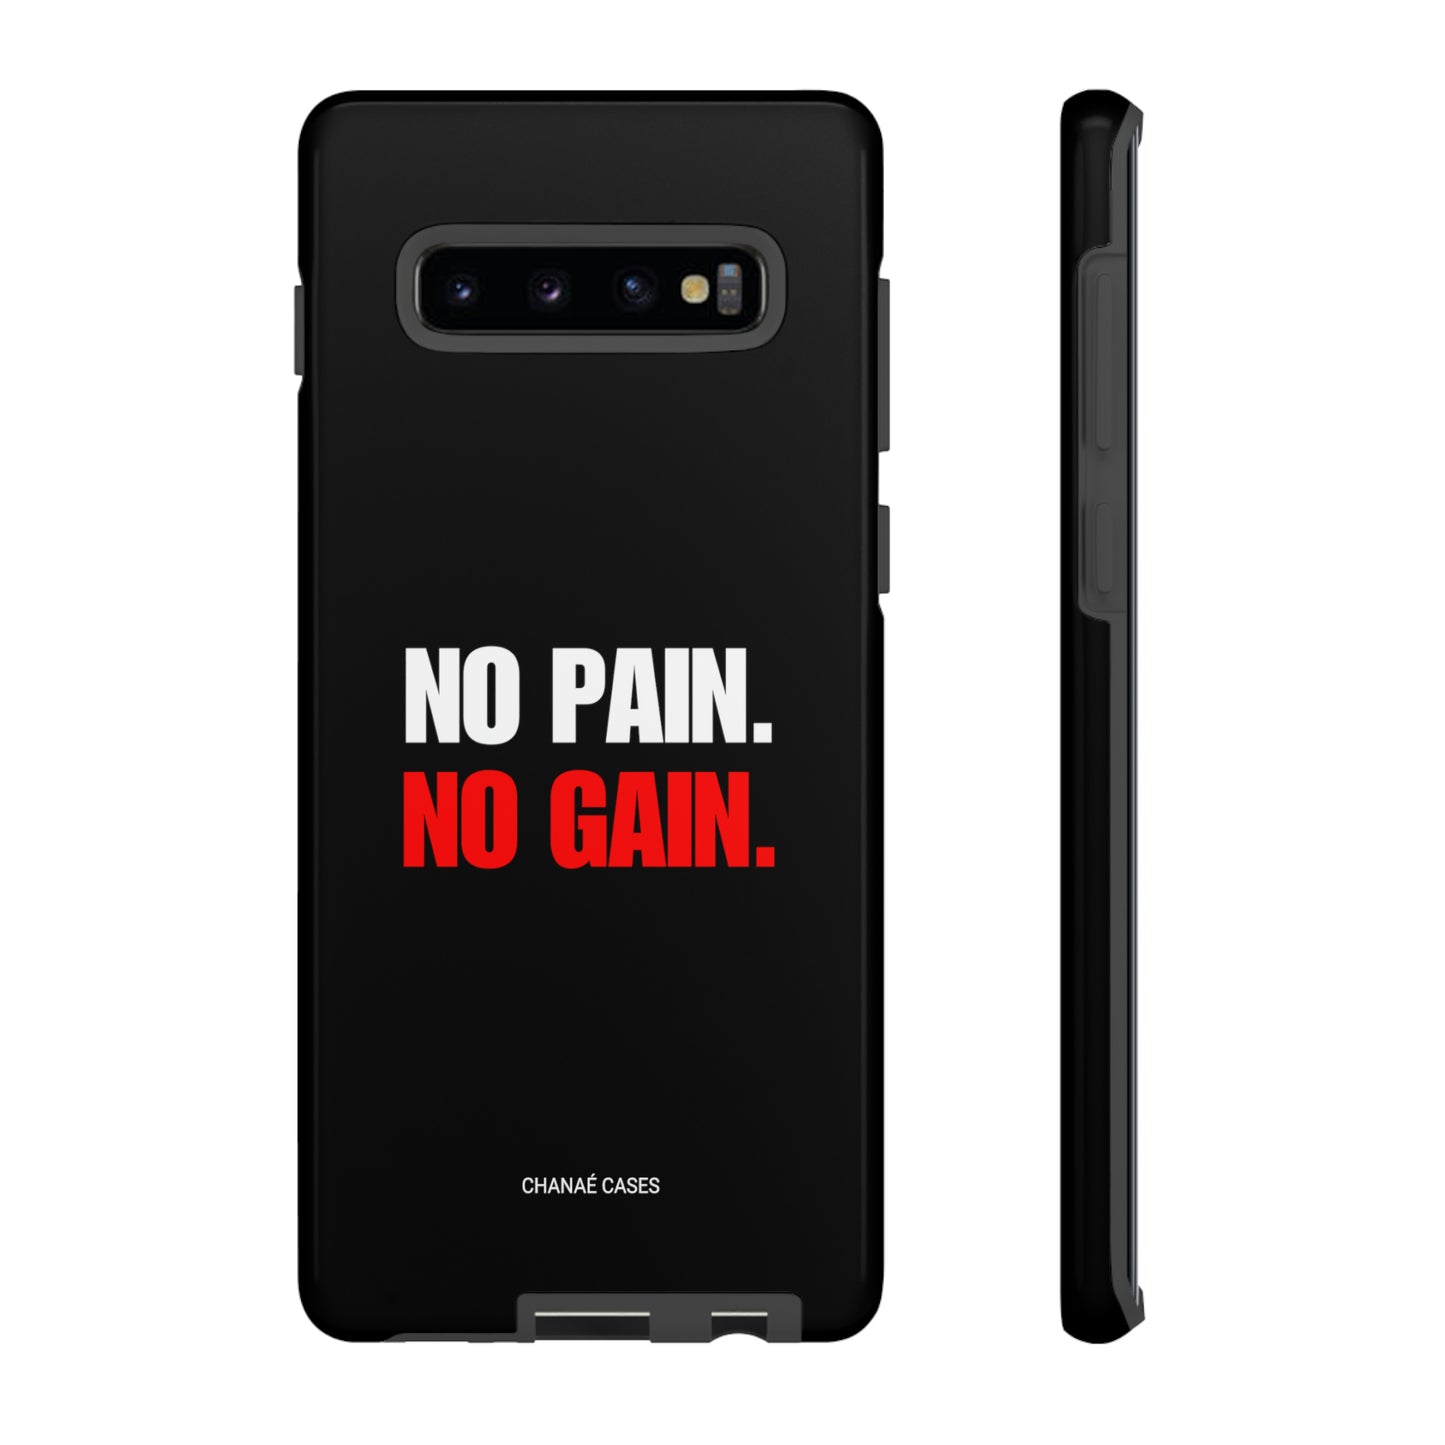 No Pain No Gain Samsung "Tough" Case (Black)